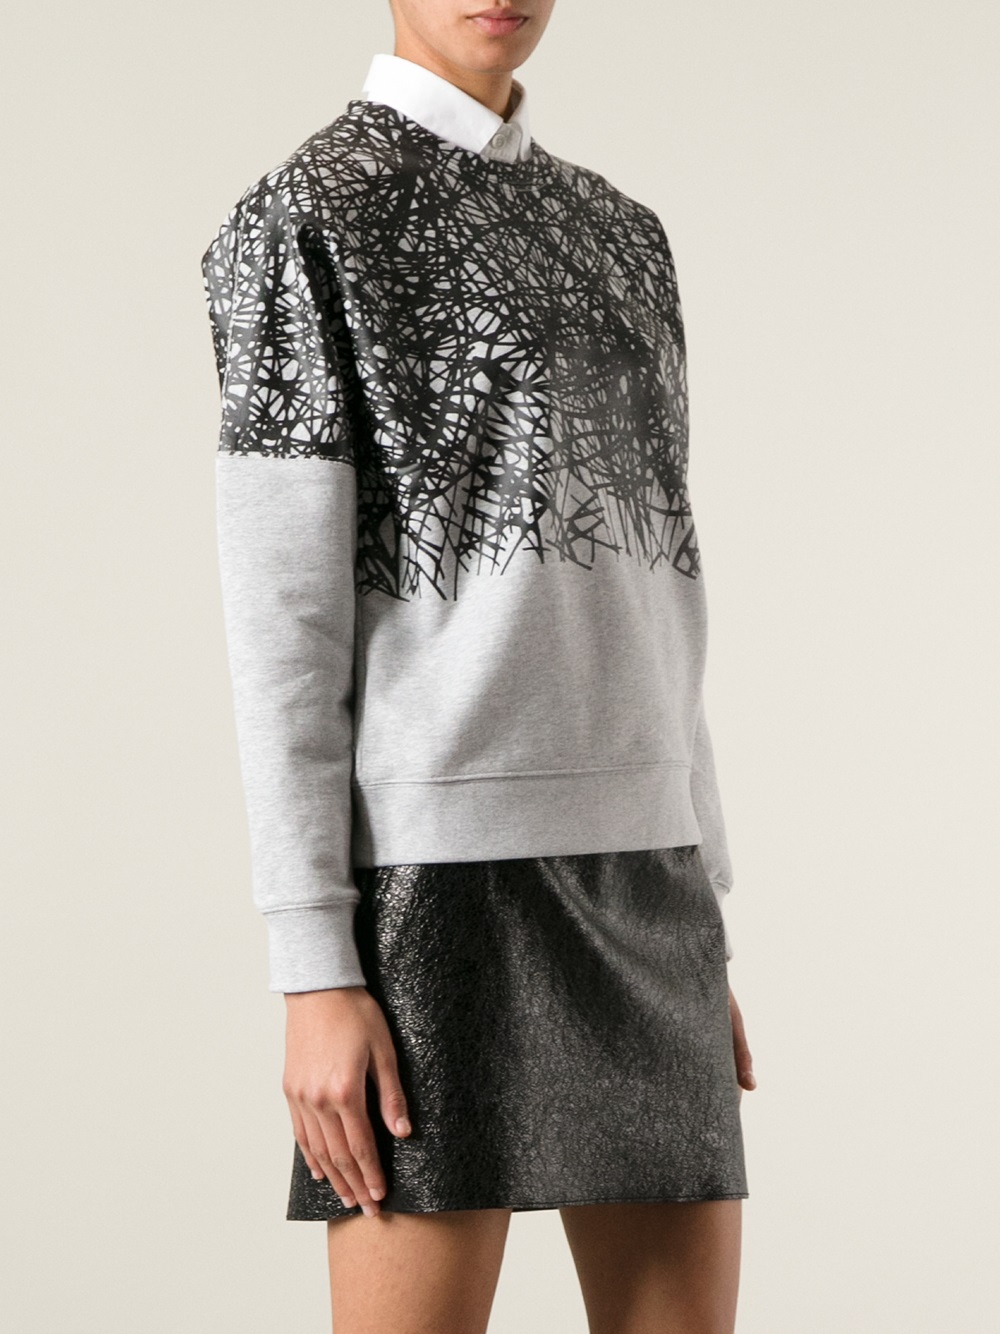 Balenciaga Scribble Print Sweater in Light Grey (Gray) - Lyst